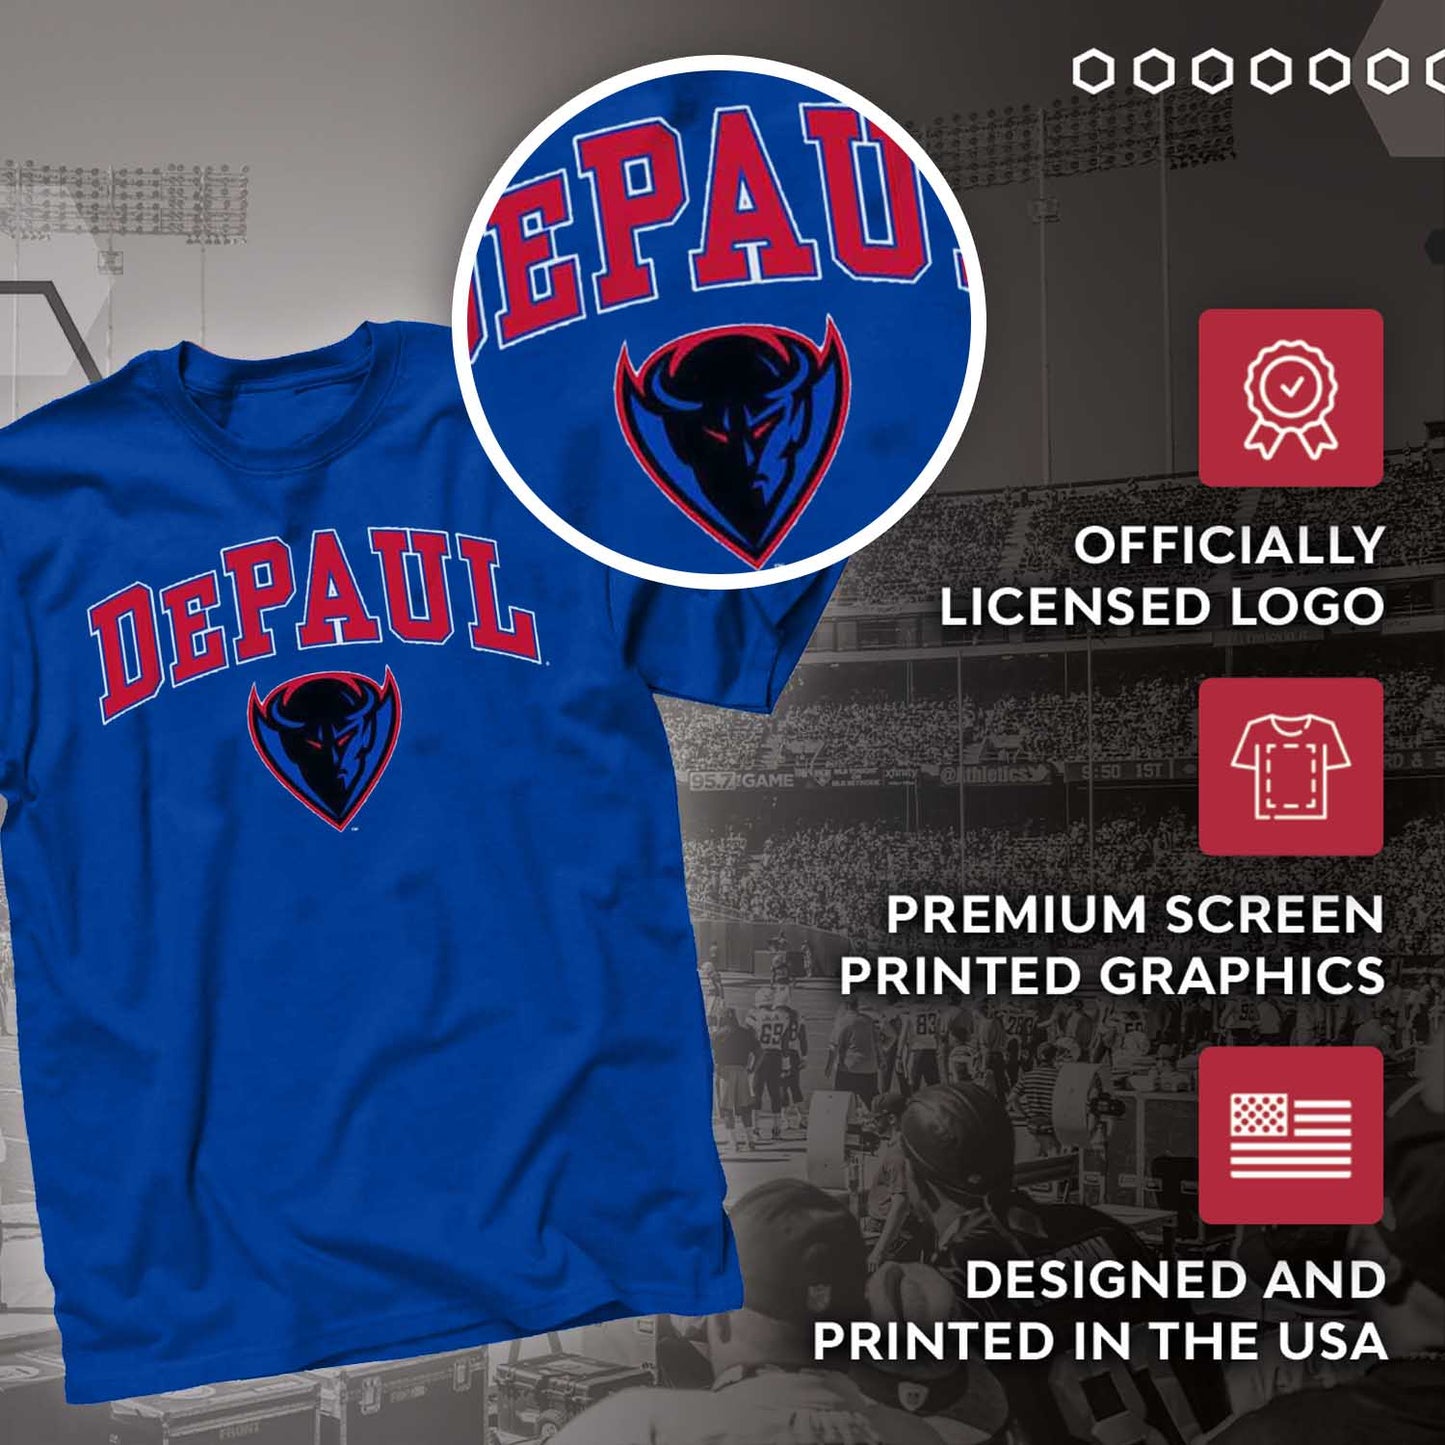 DePaul Blue Demons NCAA Adult Gameday Cotton T-Shirt - Royal